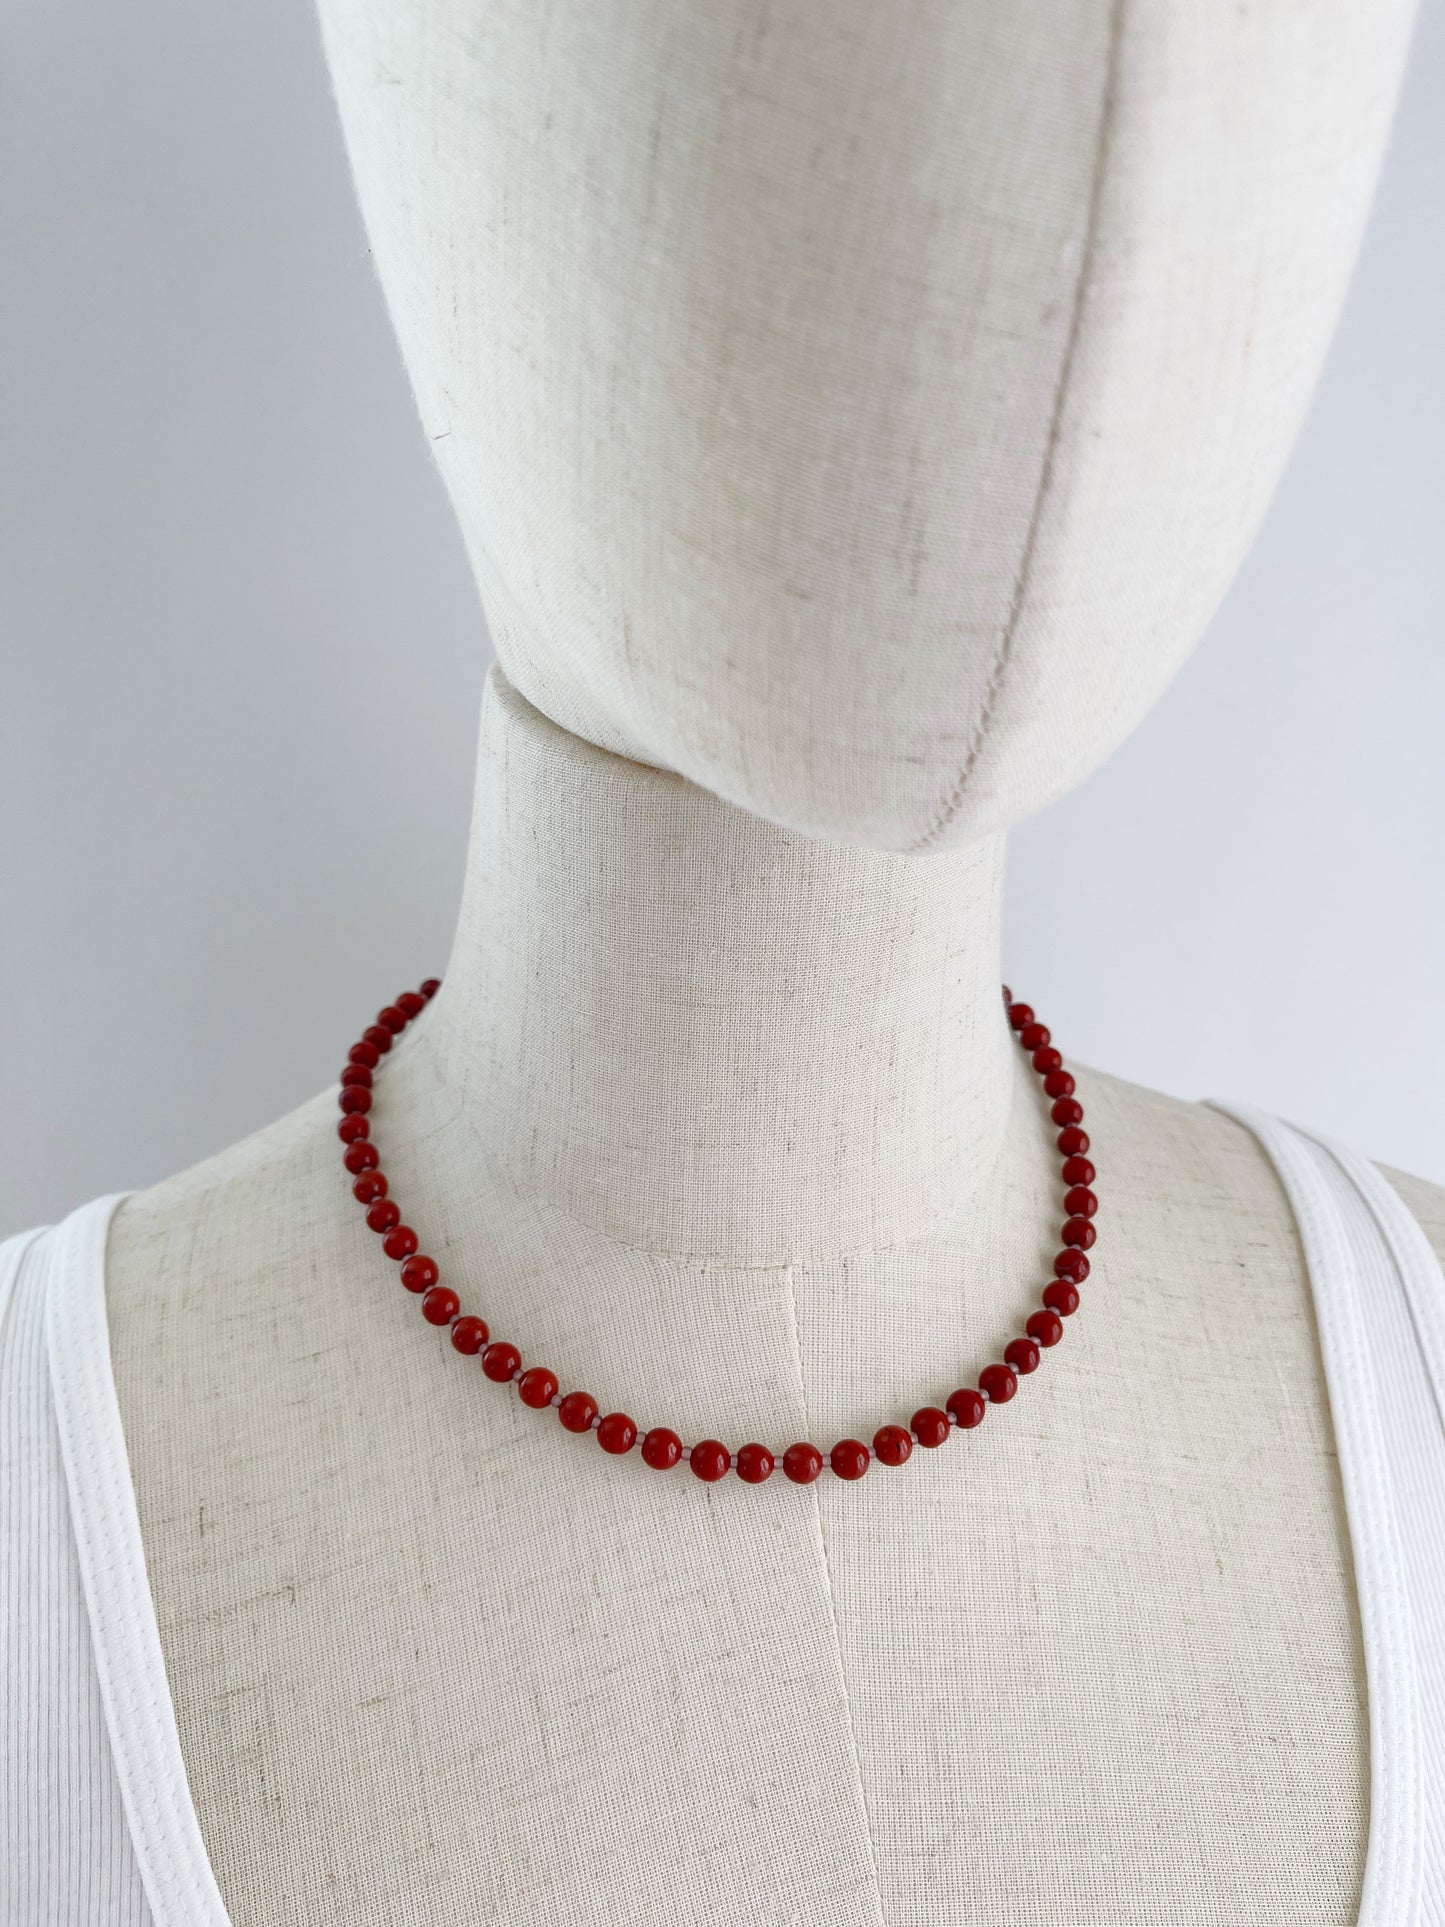 BA. Red Jasper necklace 6mm 18”